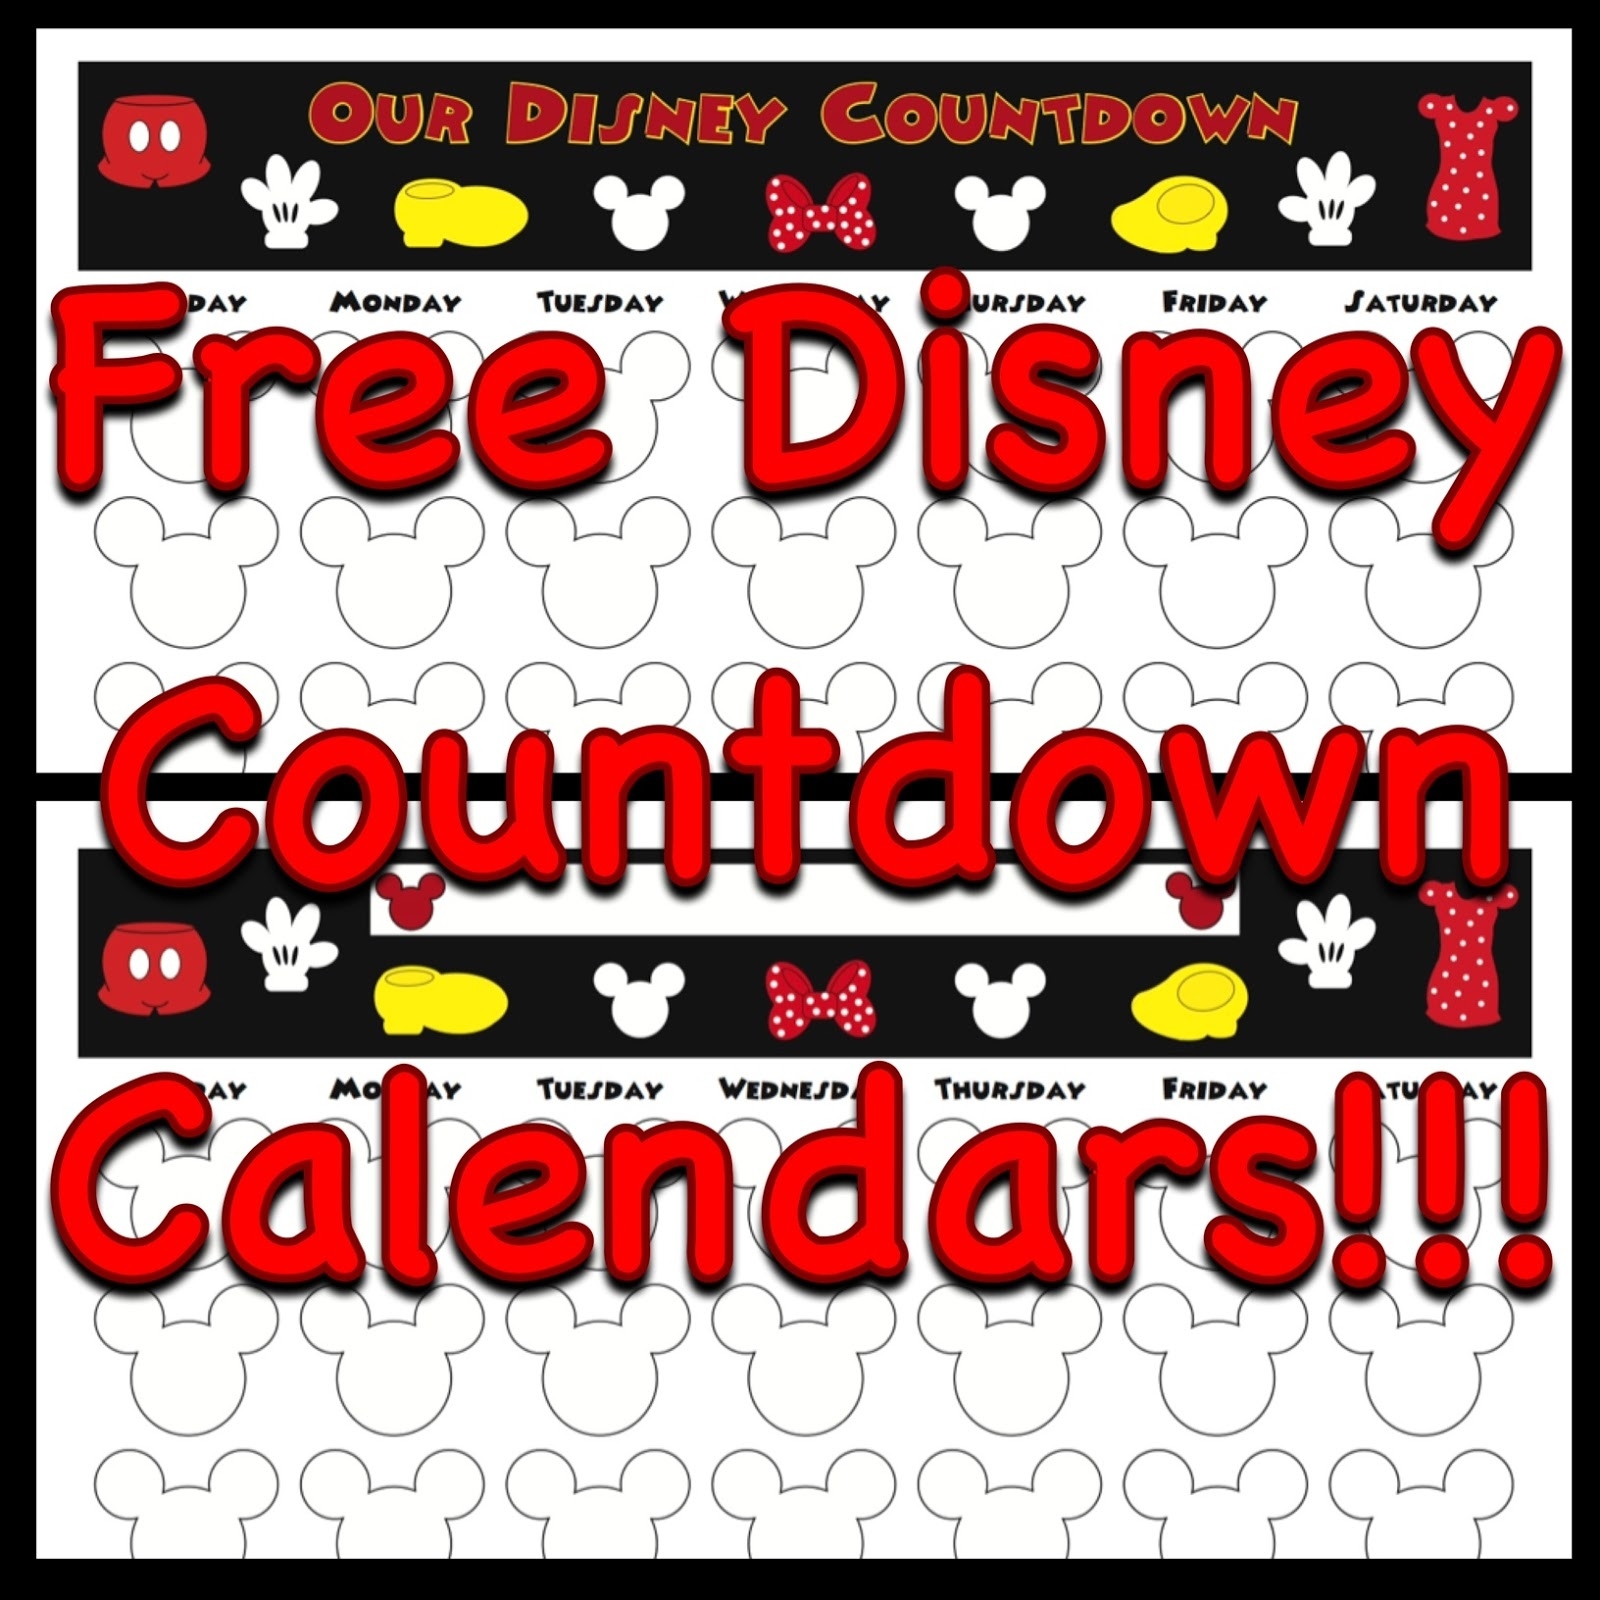 My Disney Life: Countdown Calendars Countdown Calendar To Disney Vacation